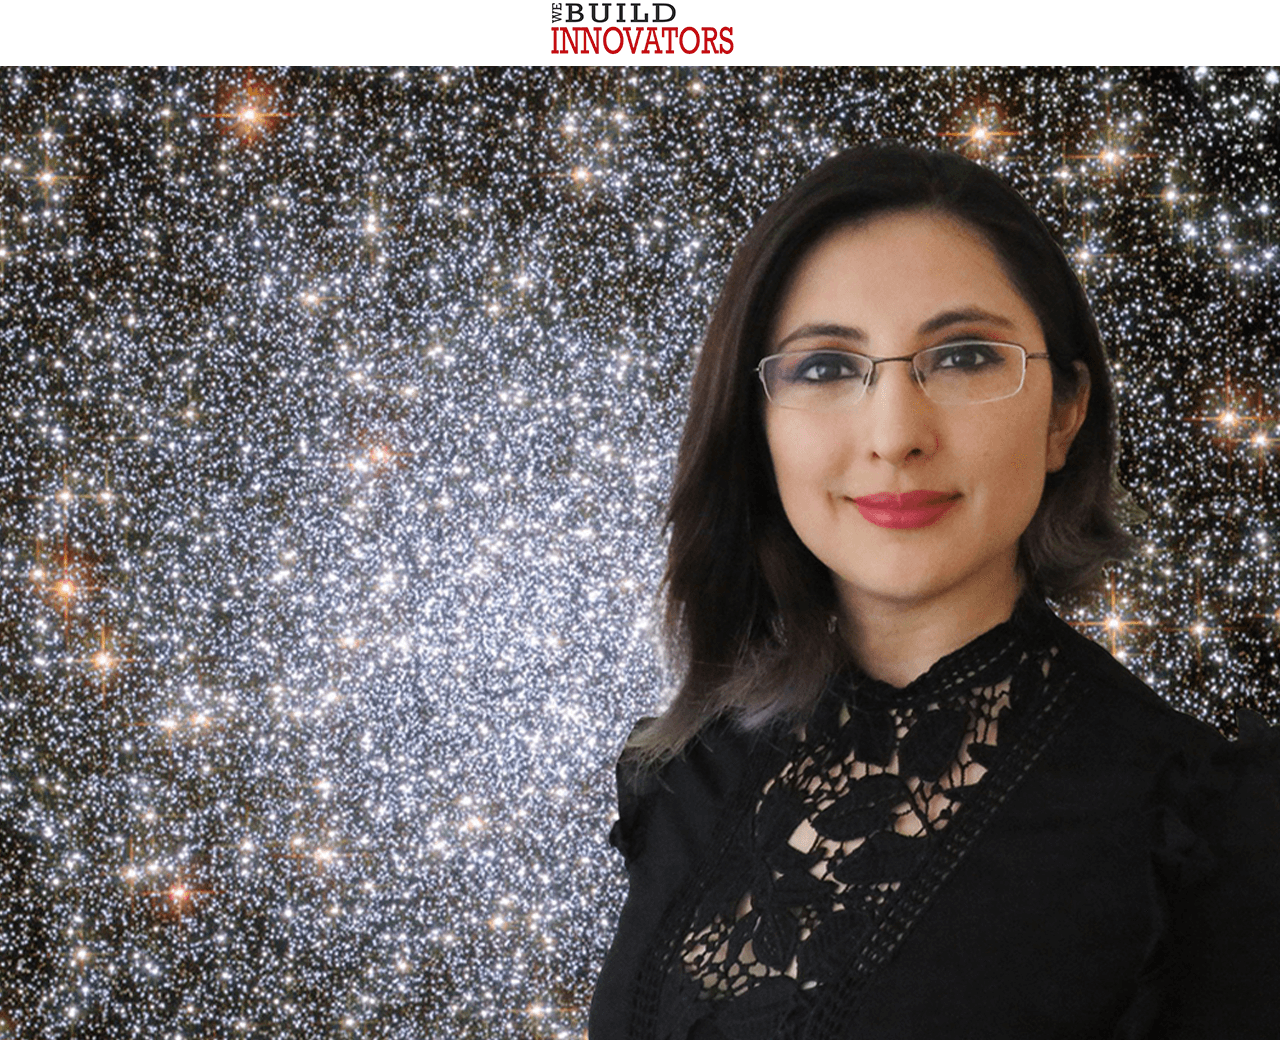 TTU astrophysics post-doc Liliana Rivera Sandoval